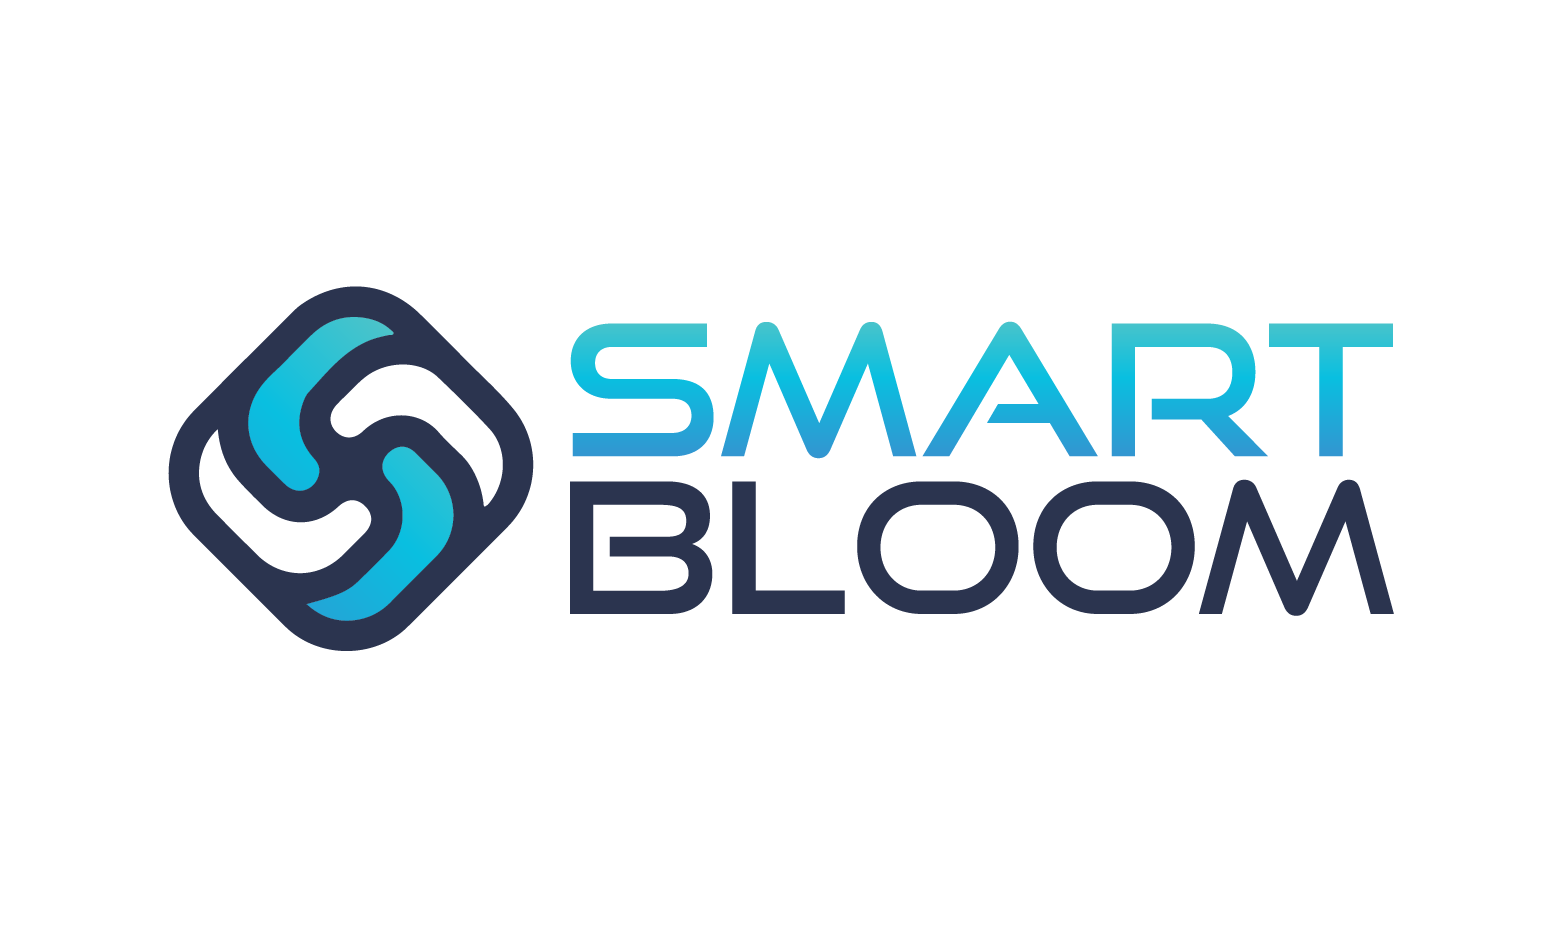 SmartBloom.com - Creative brandable domain for sale